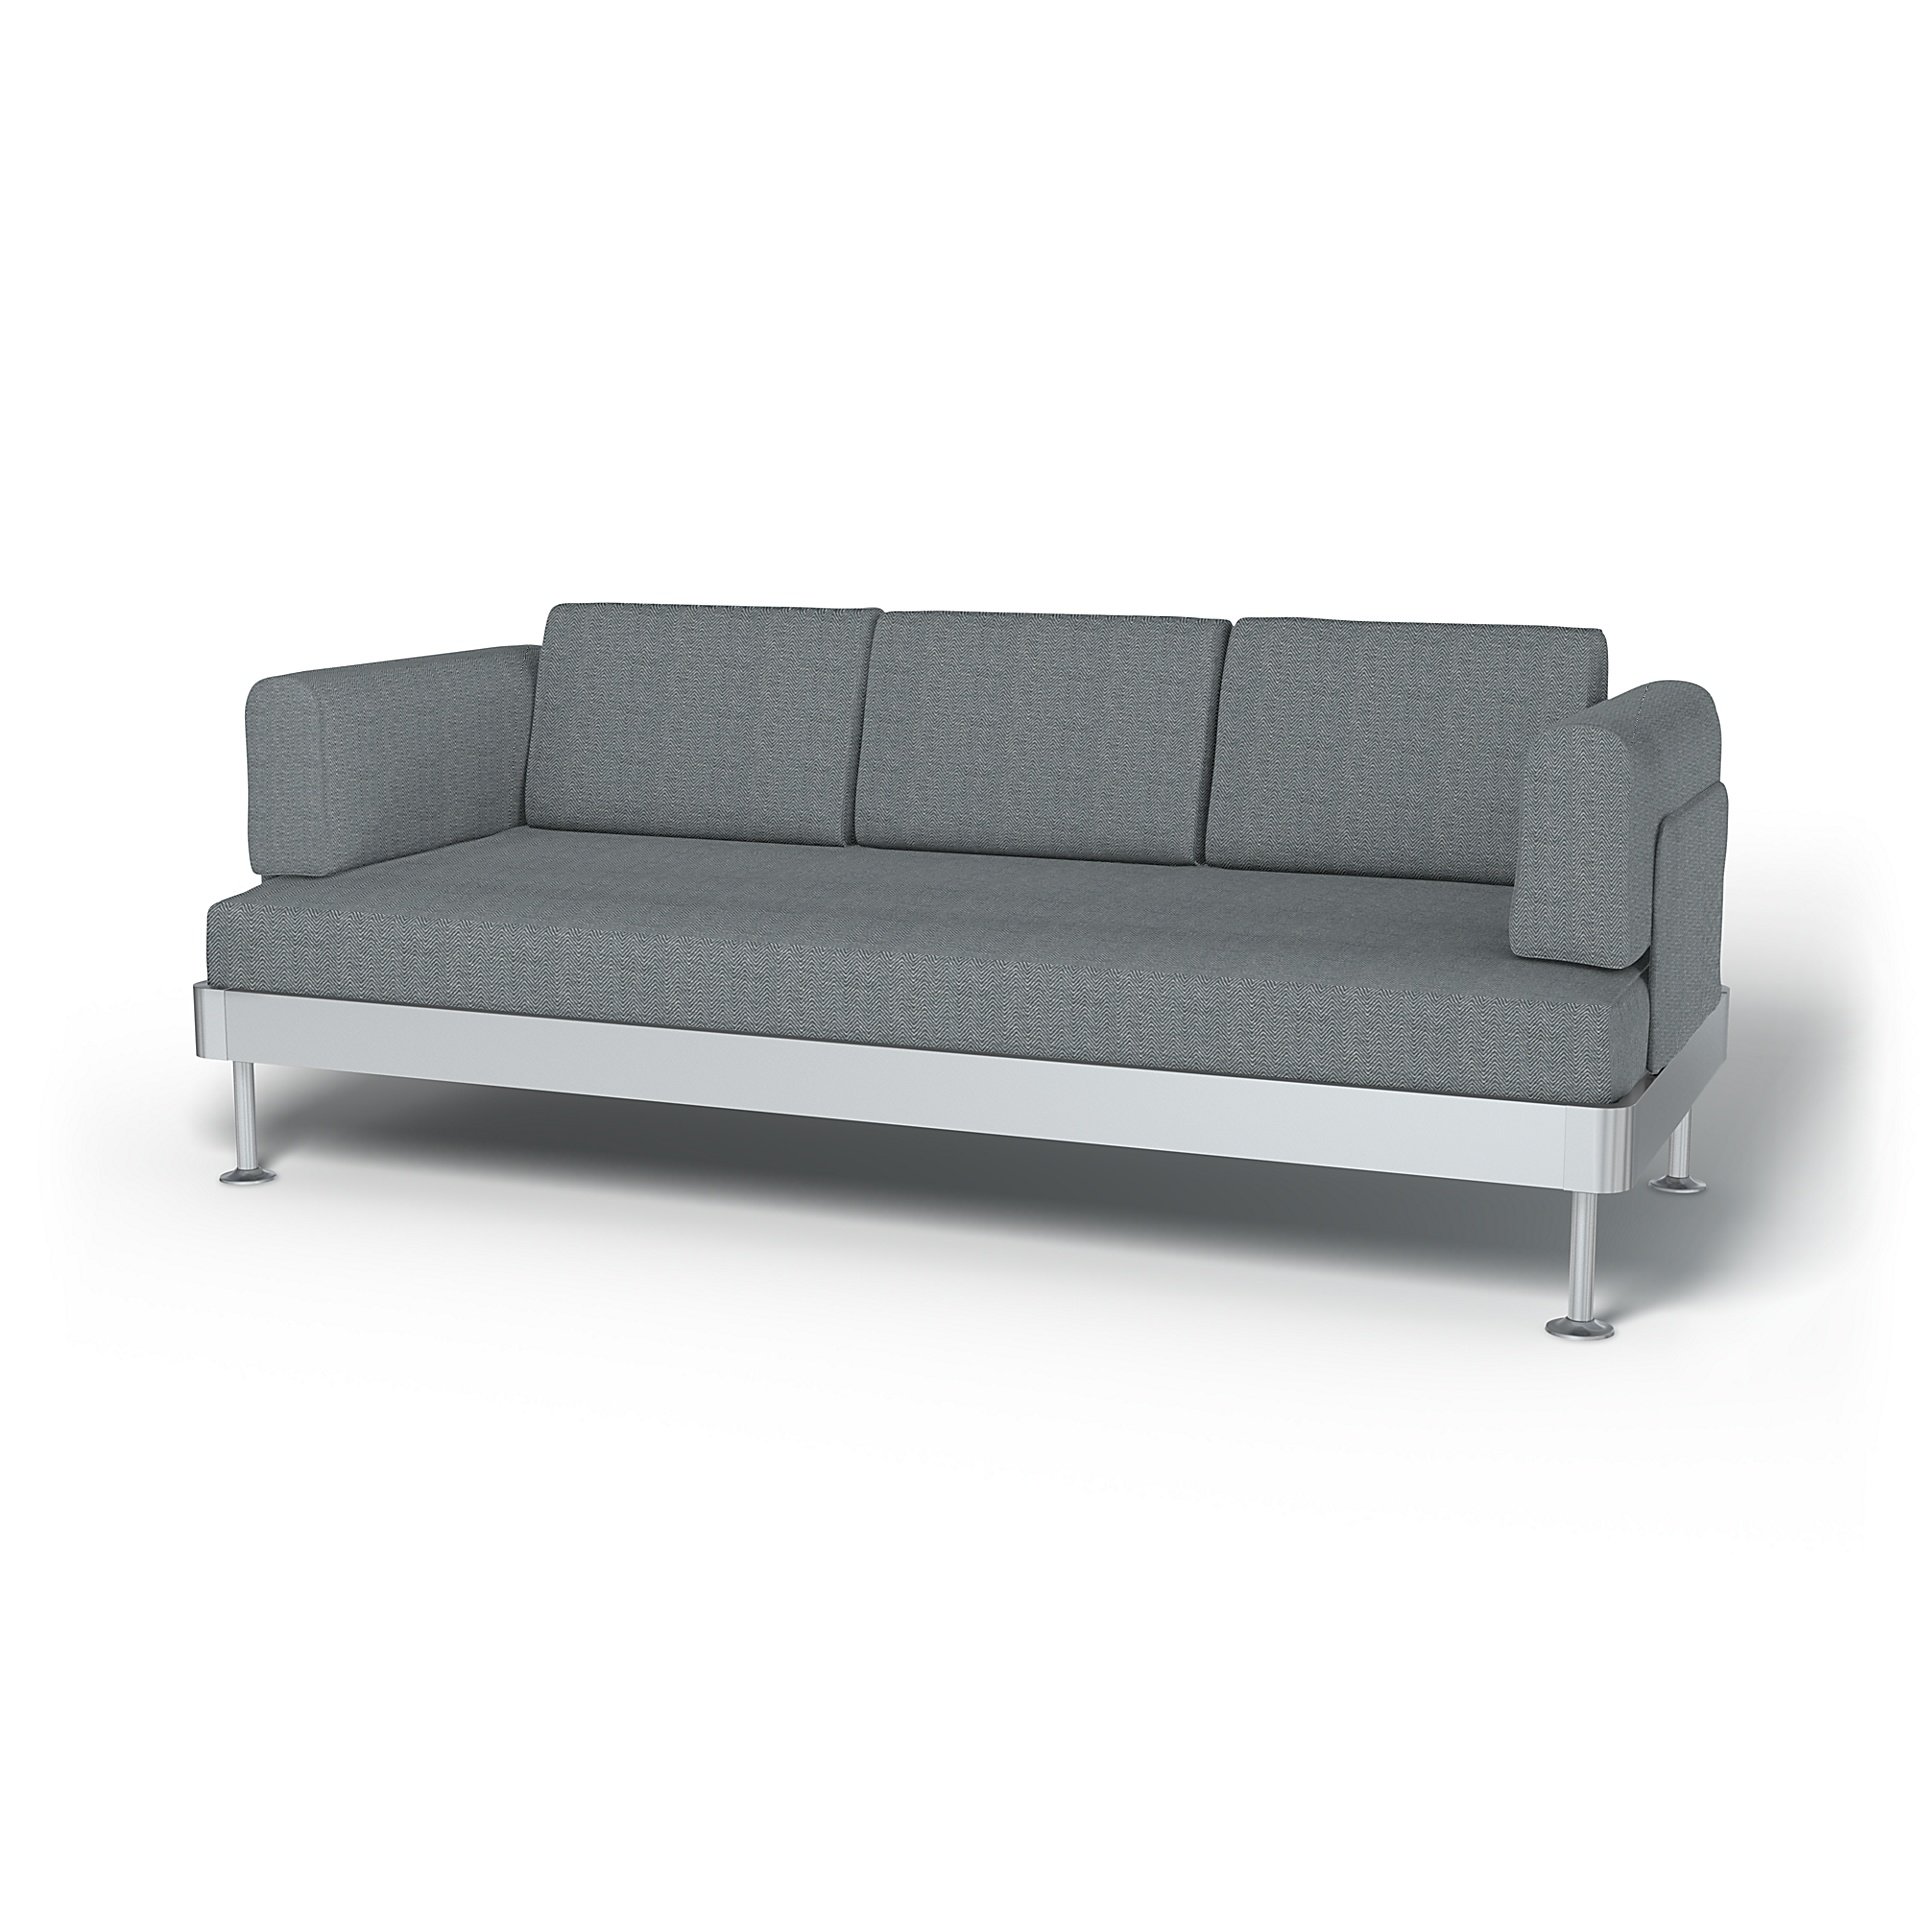 IKEA - Delaktig 3 Seater Sofa Cover, Denim, Cotton - Bemz